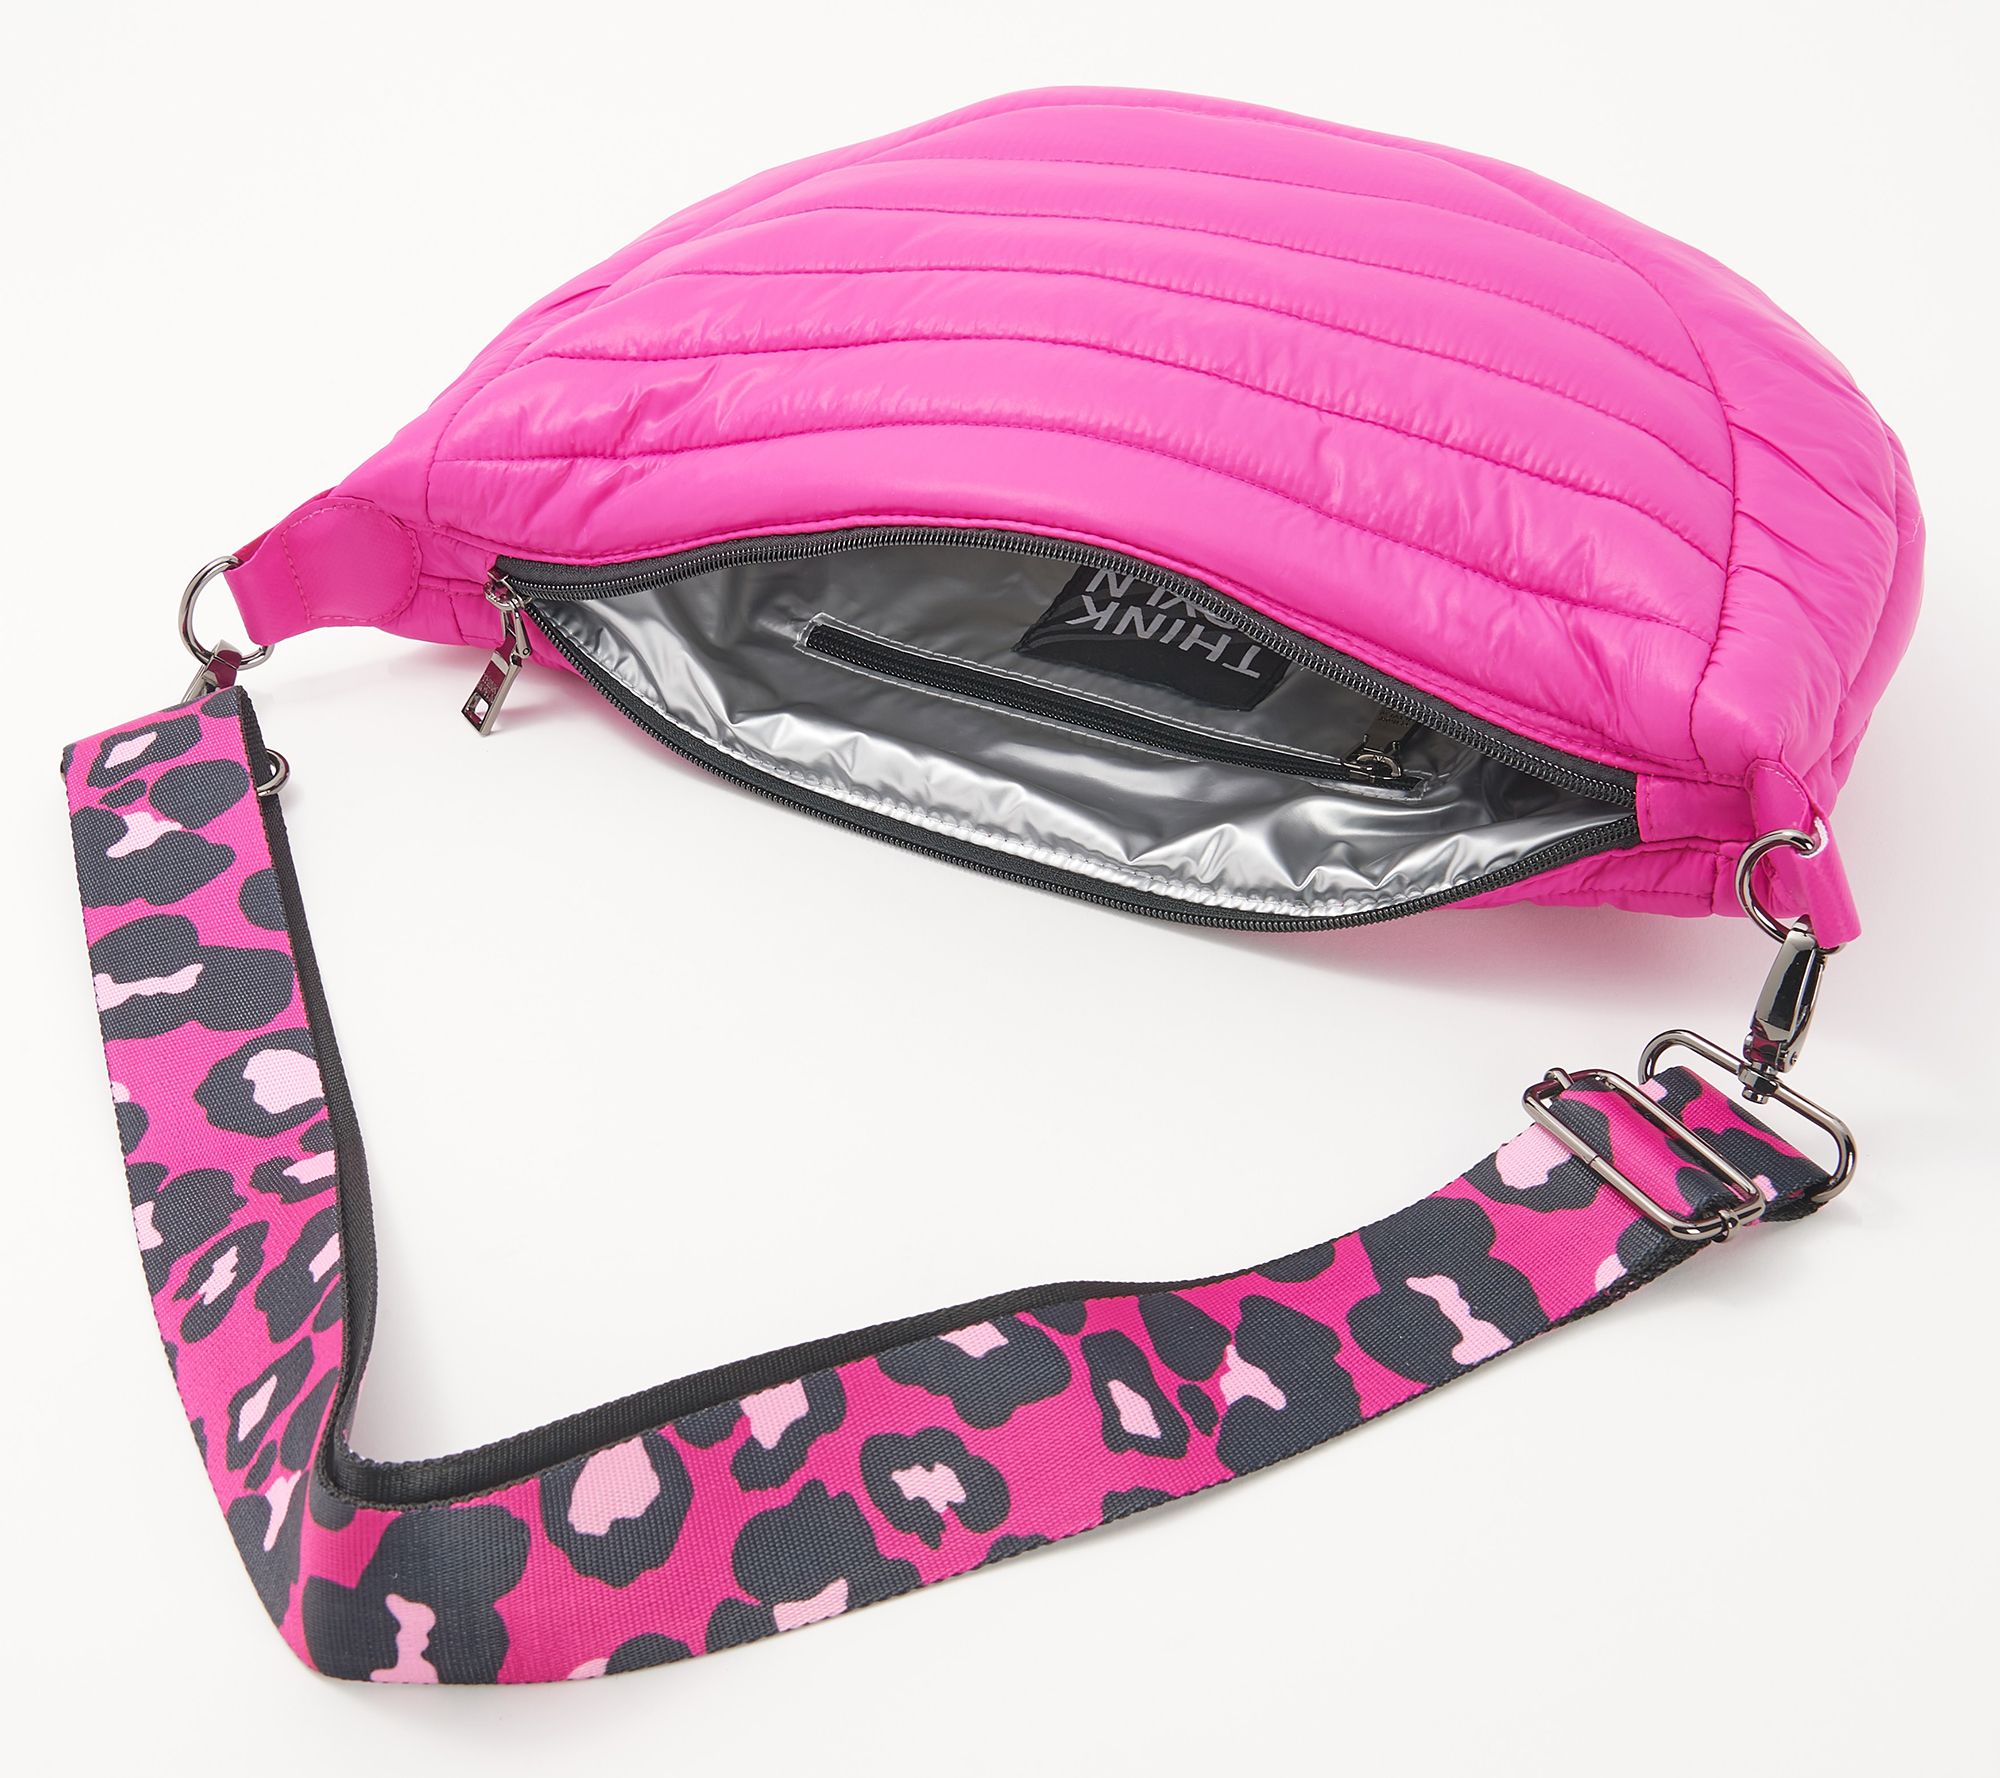 Think Royln Front Wallet Belt Bag w/ Reversible Strap - Fanny 